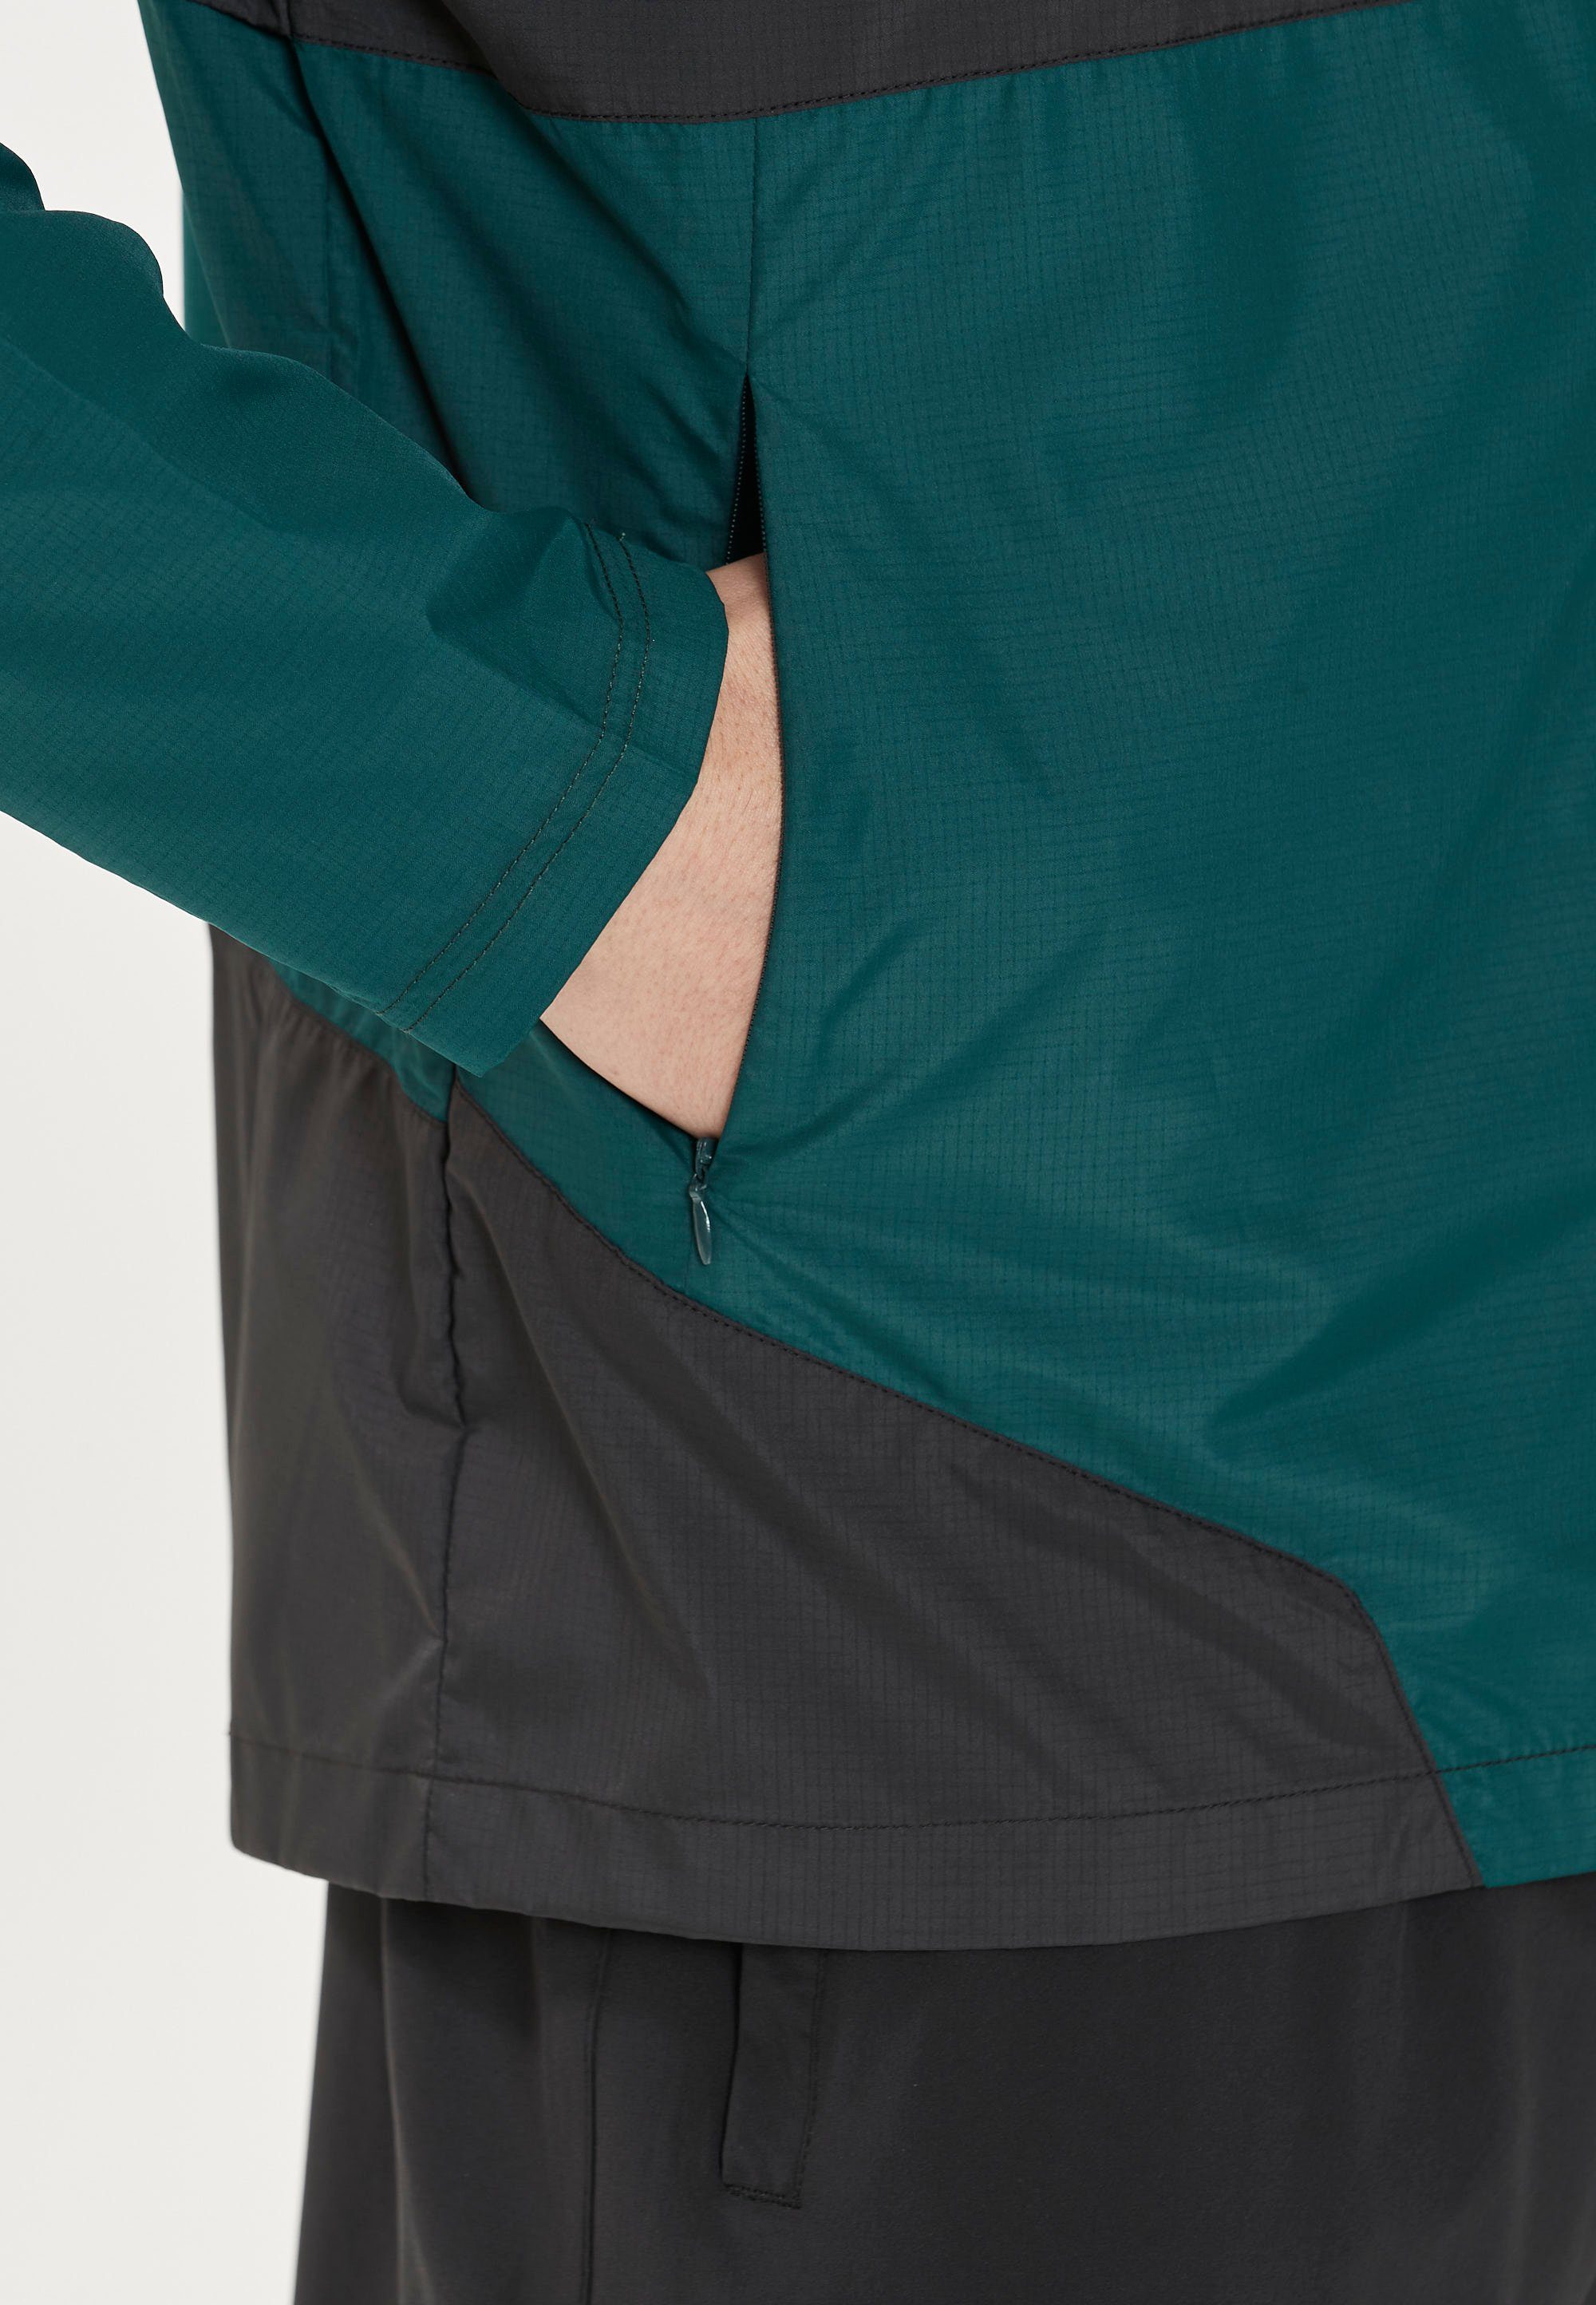 ENDURANCE Laufjacke NOVANT Jacket mit Details M reflektierenden dunkelgrün Functional